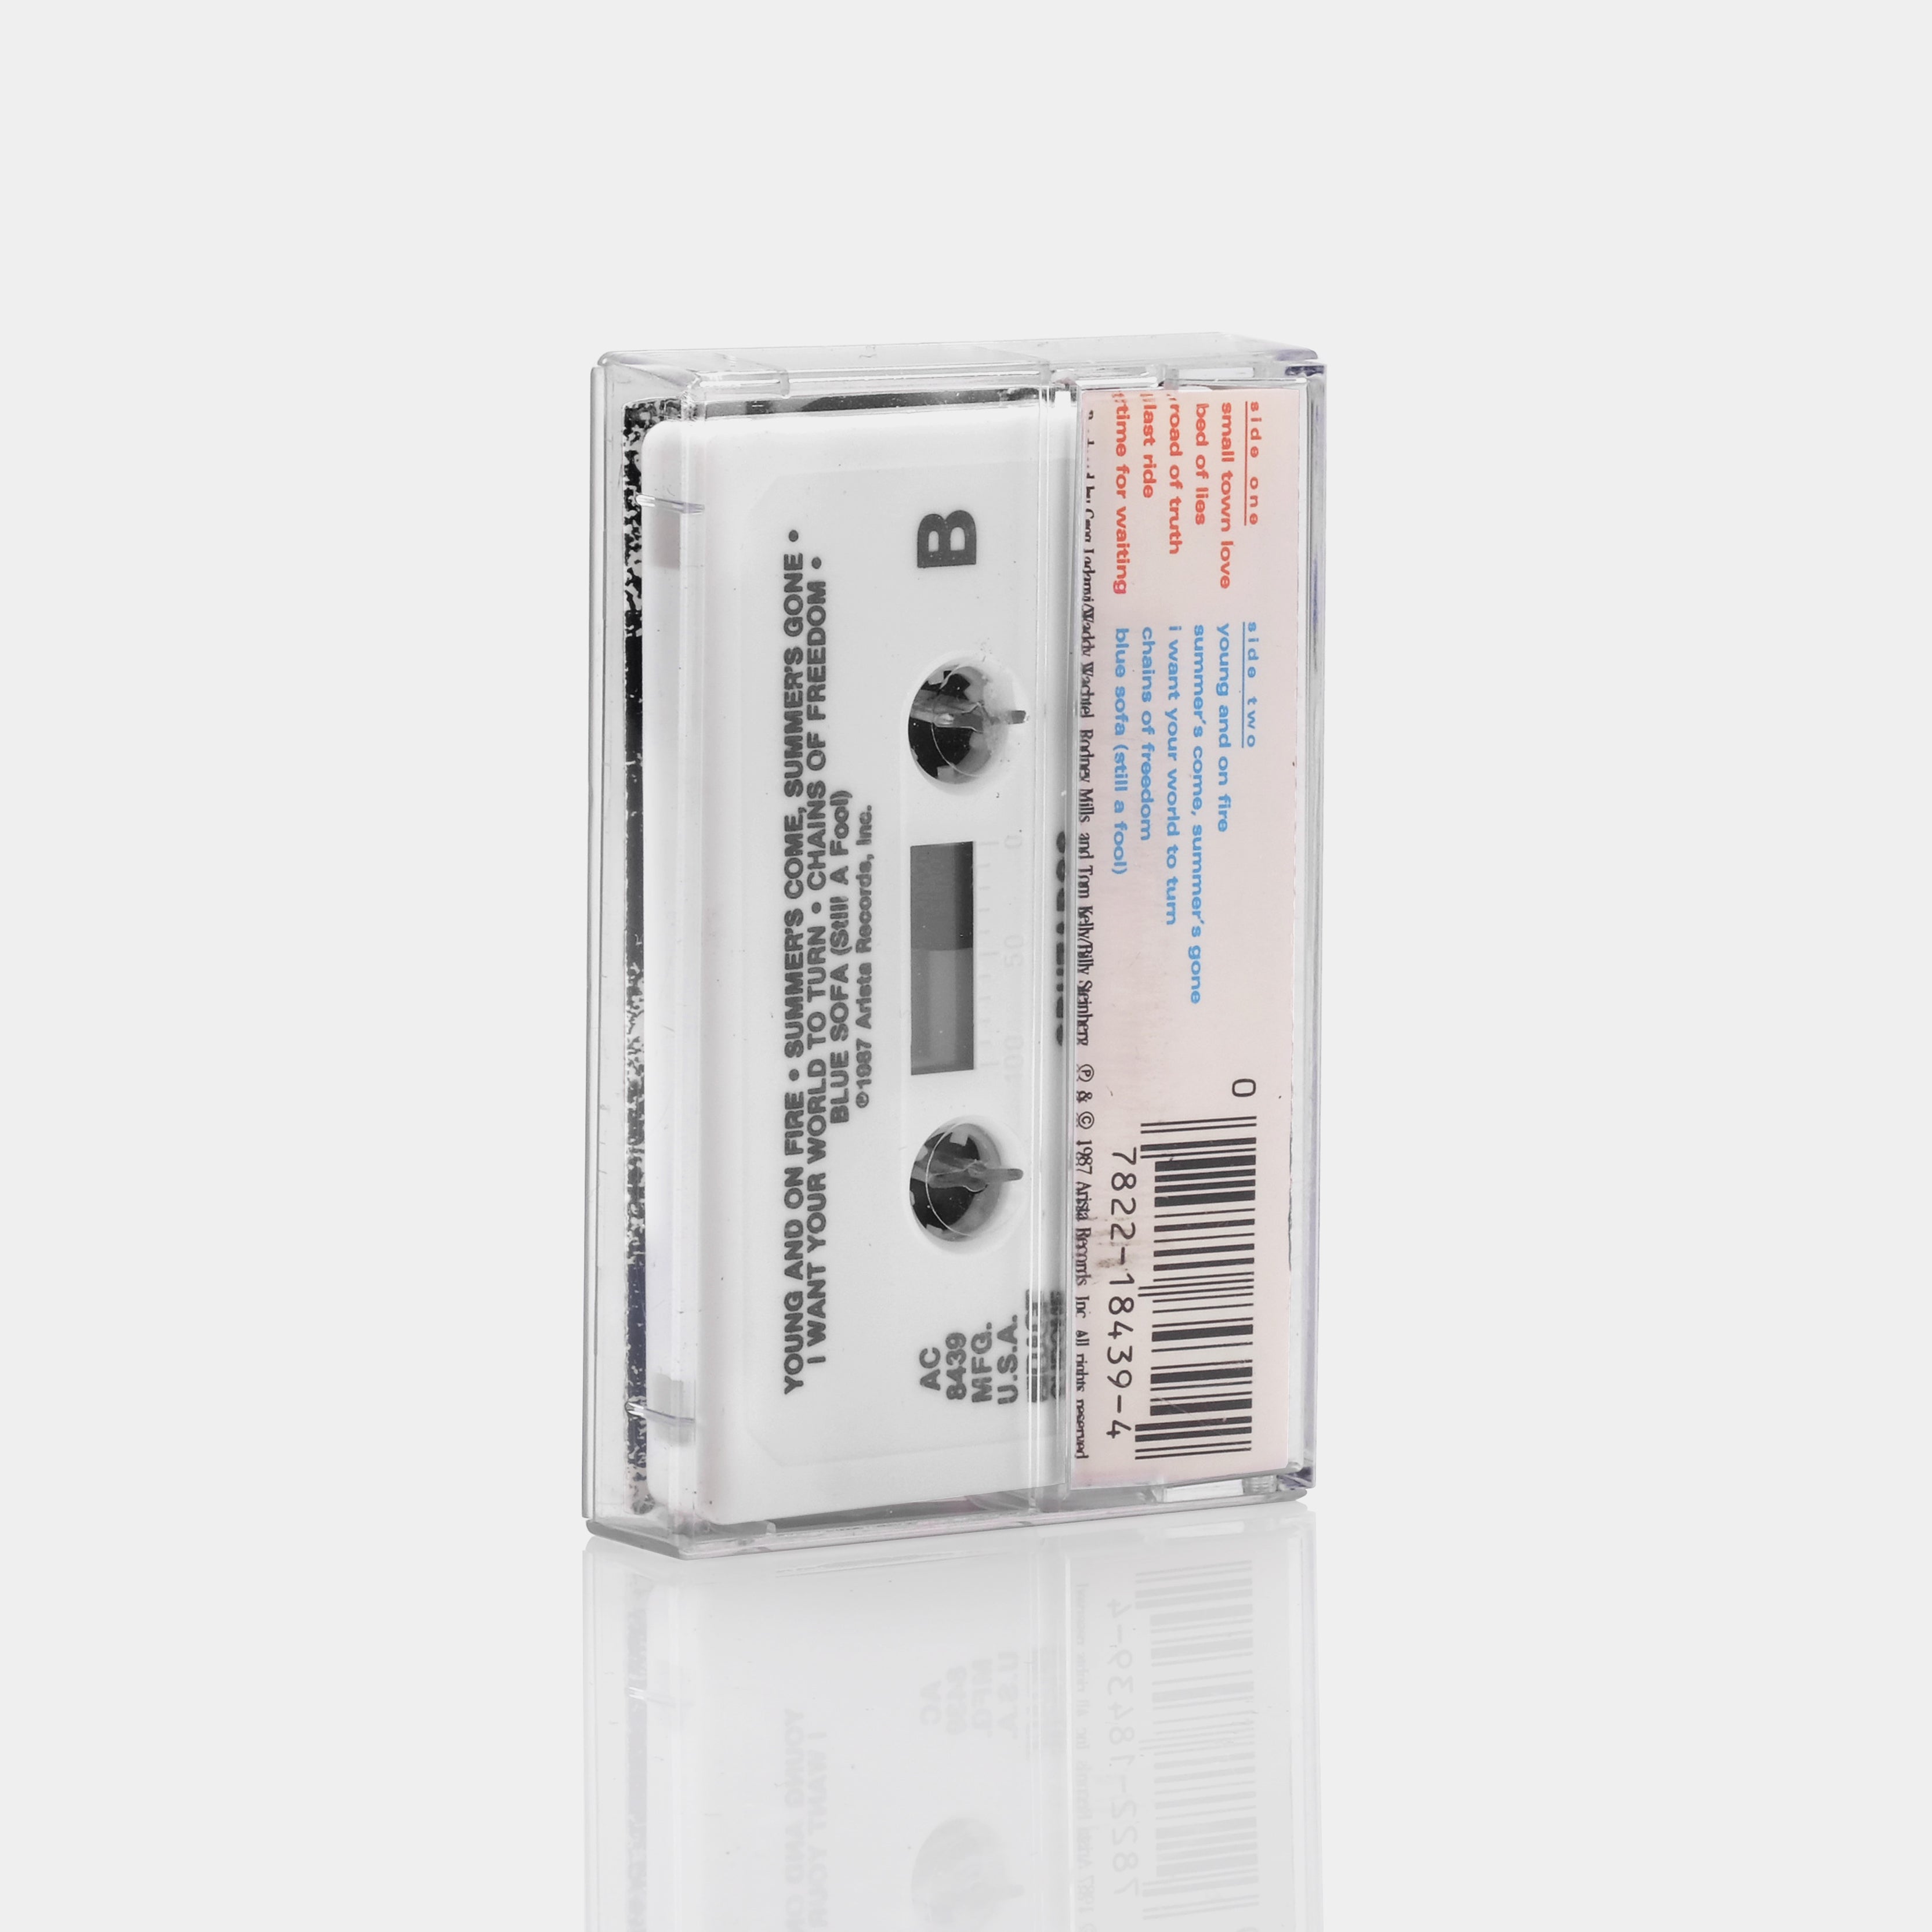 Cruzados - After Dark Cassette Tape